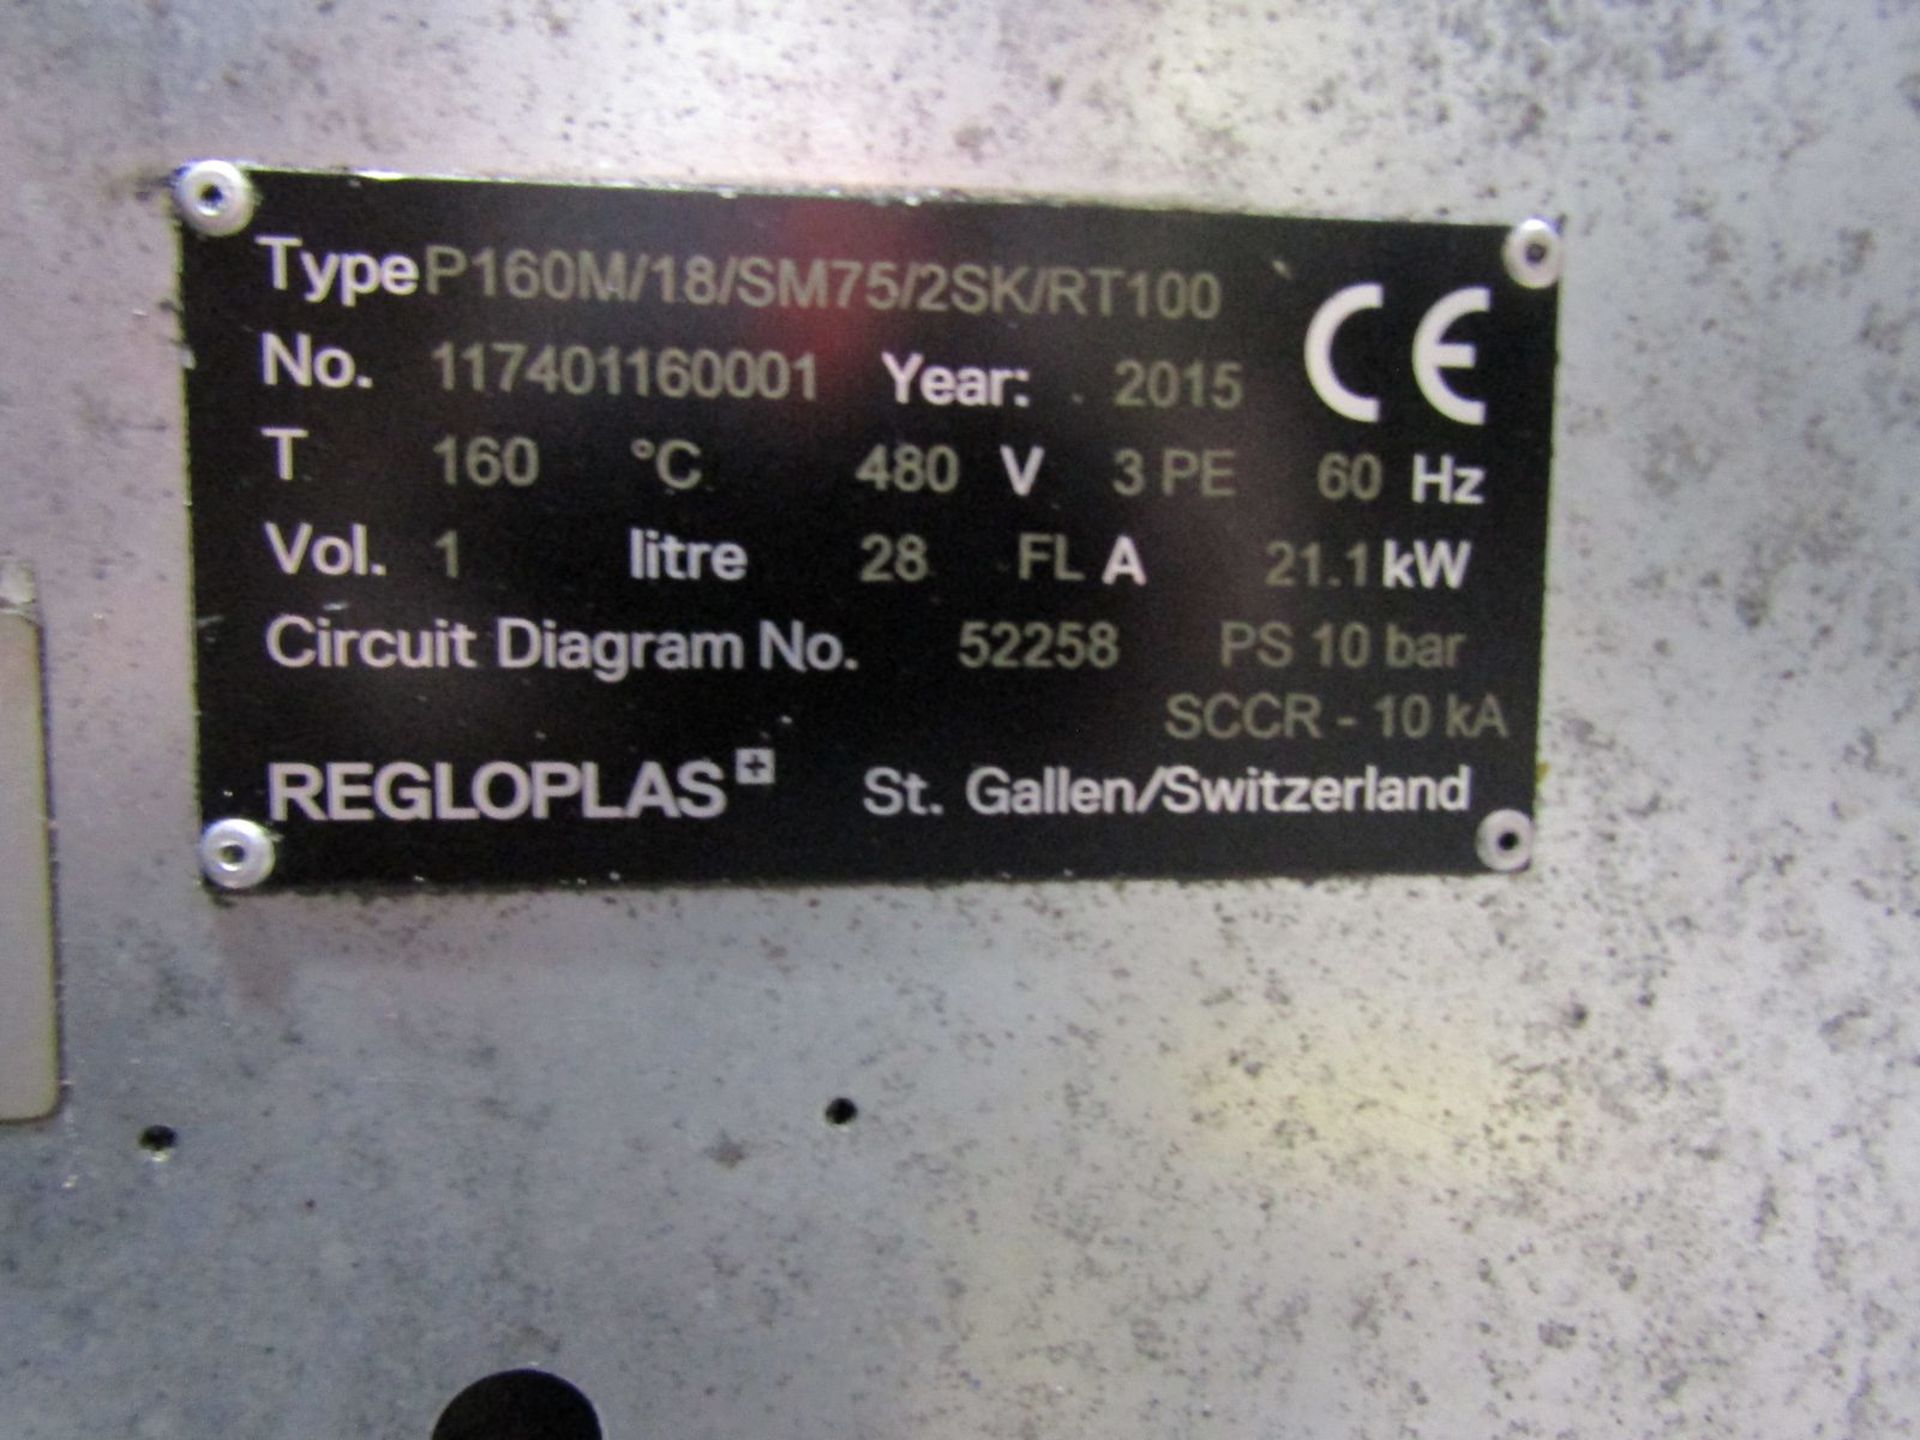 Regloplas 160 degree C Model P160M/18/SM75/25K/RT100 Portable Temperature Control Unit - Image 3 of 4